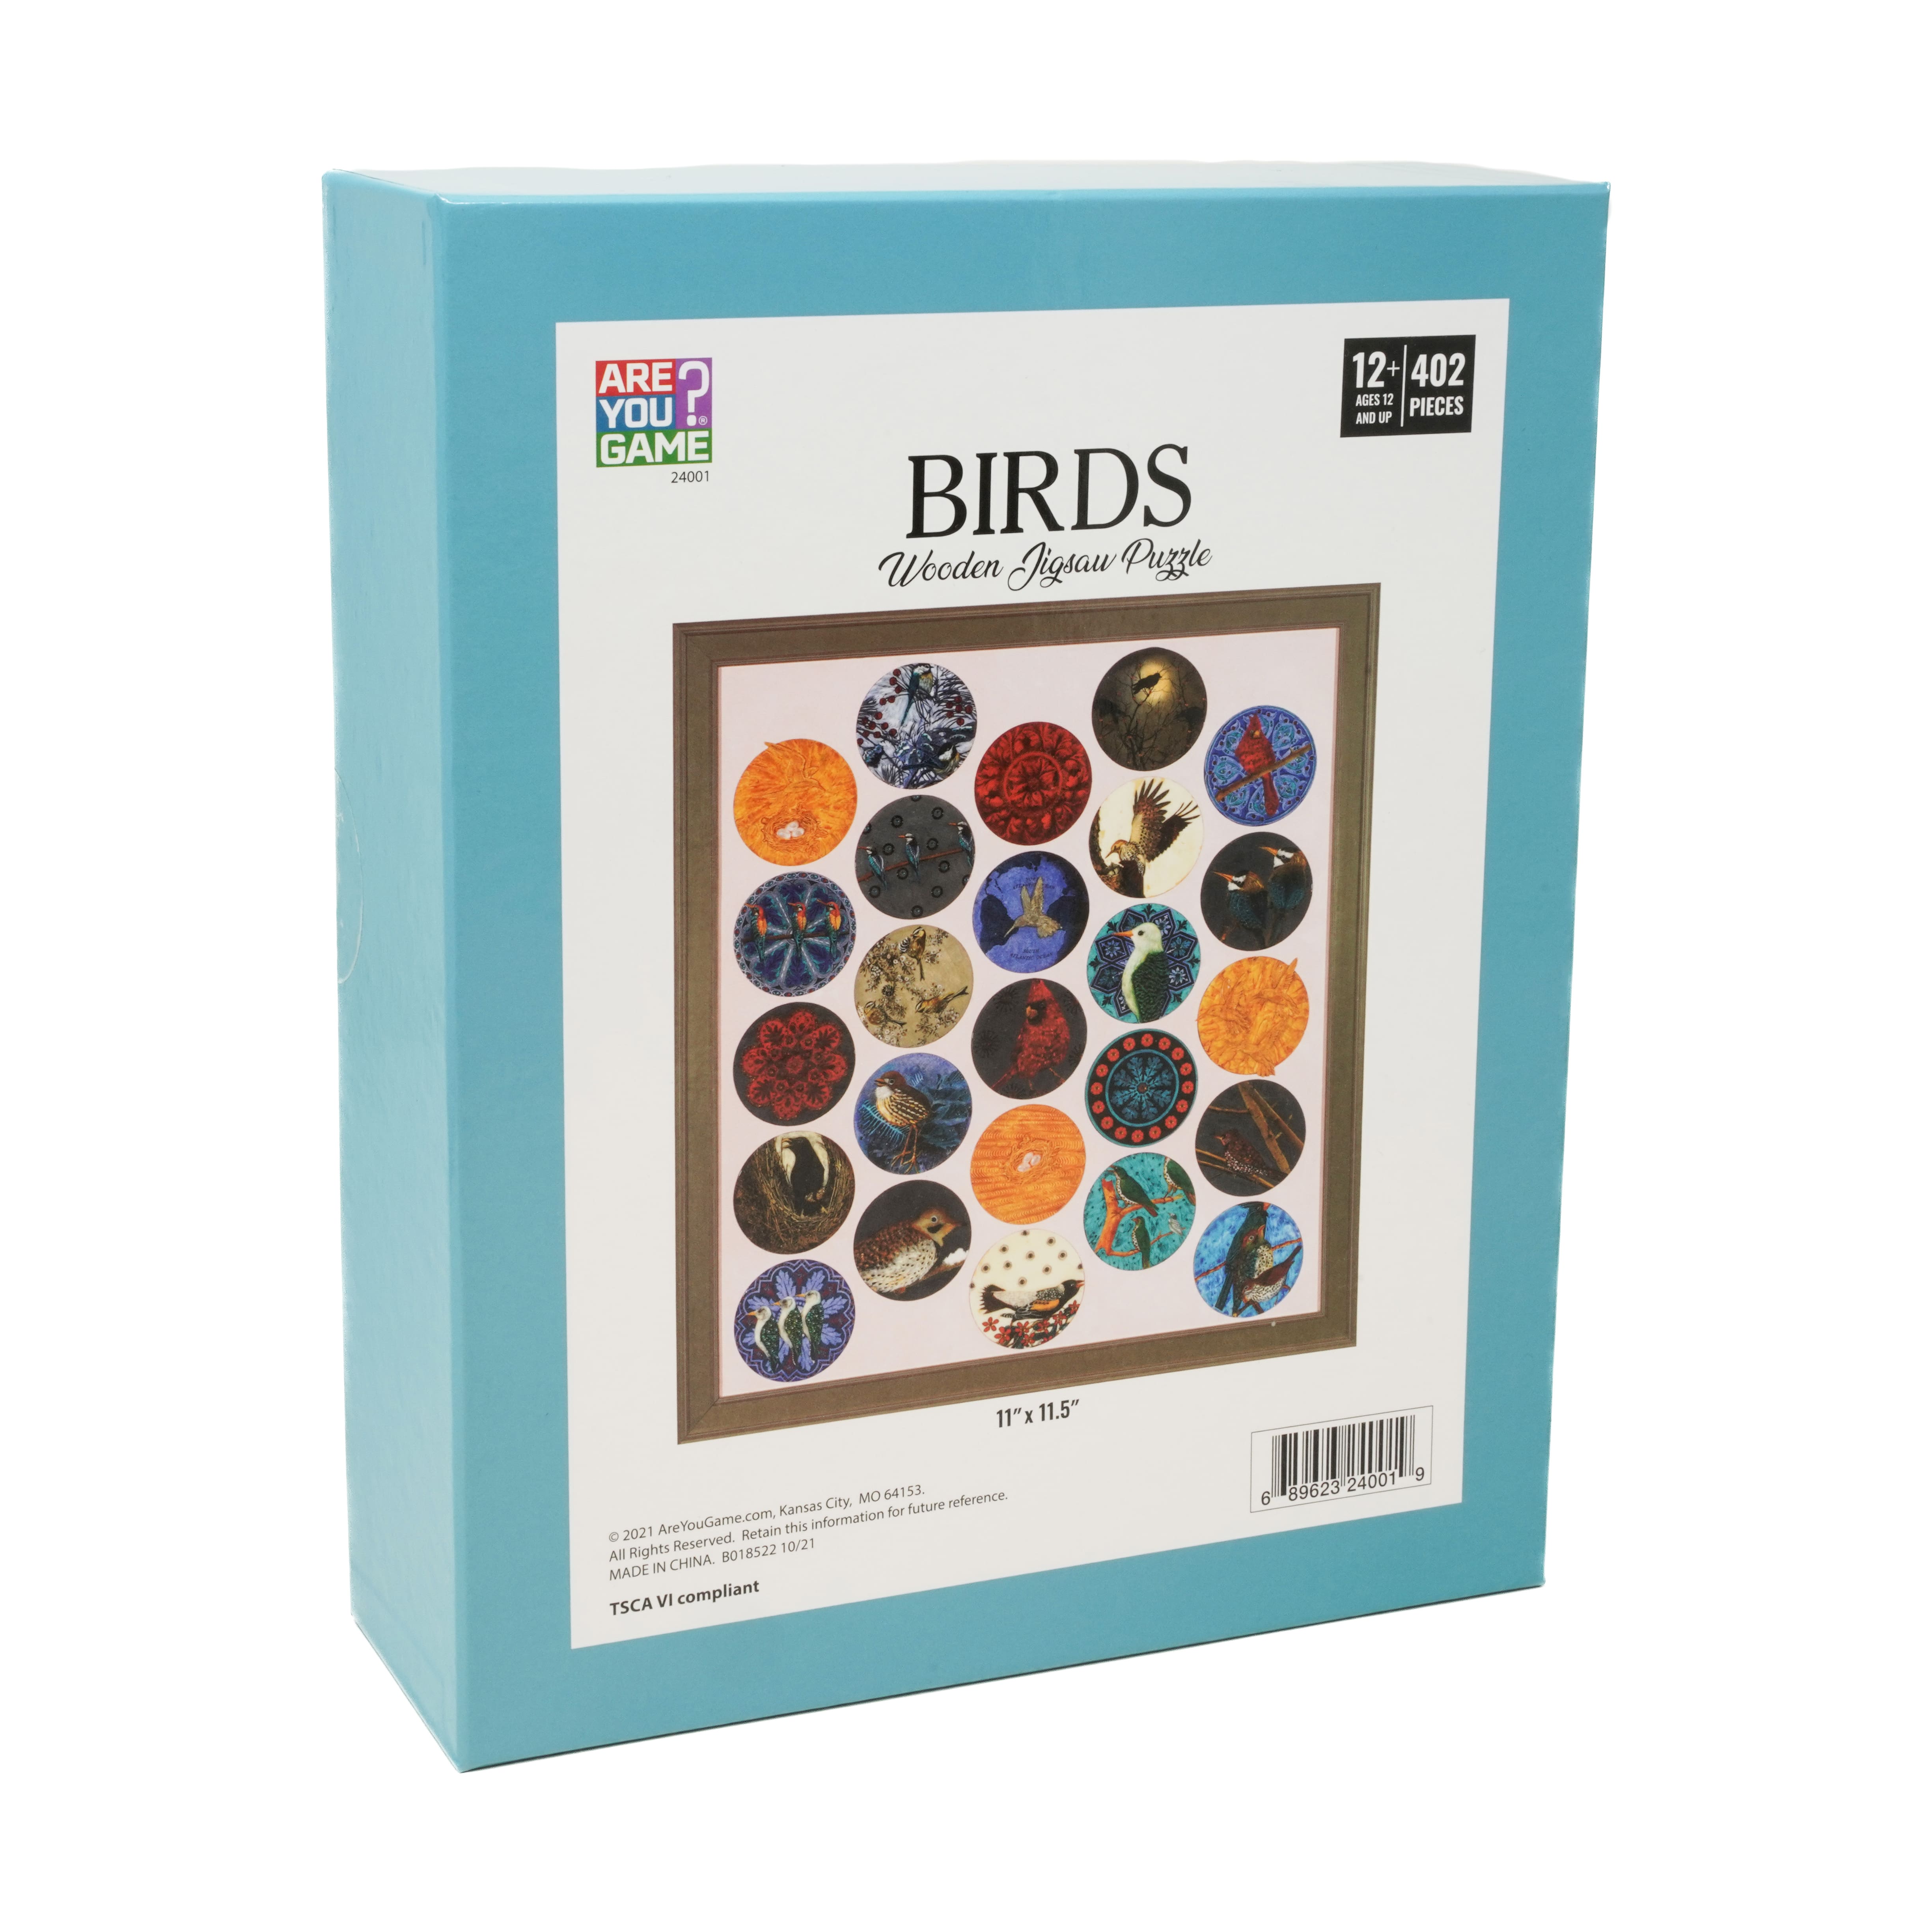 Wooden Jigsaw Puzzle - Birds: 402 Pcs